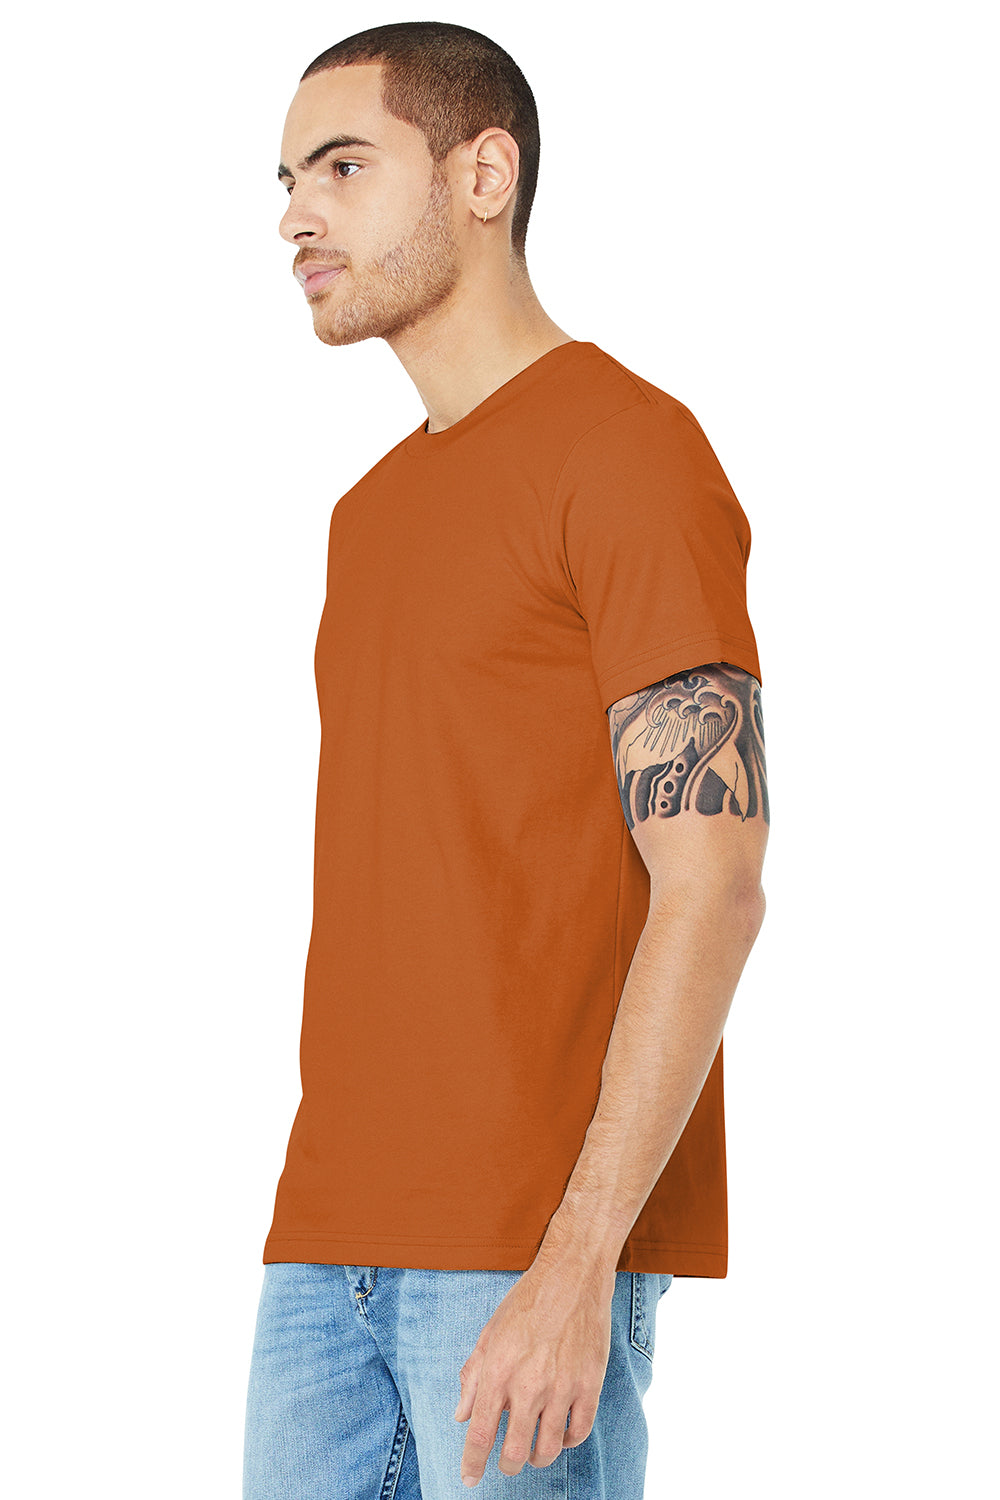 Bella + Canvas BC3001/3001C Mens Jersey Short Sleeve Crewneck T-Shirt Autumn Orange Model 3Q